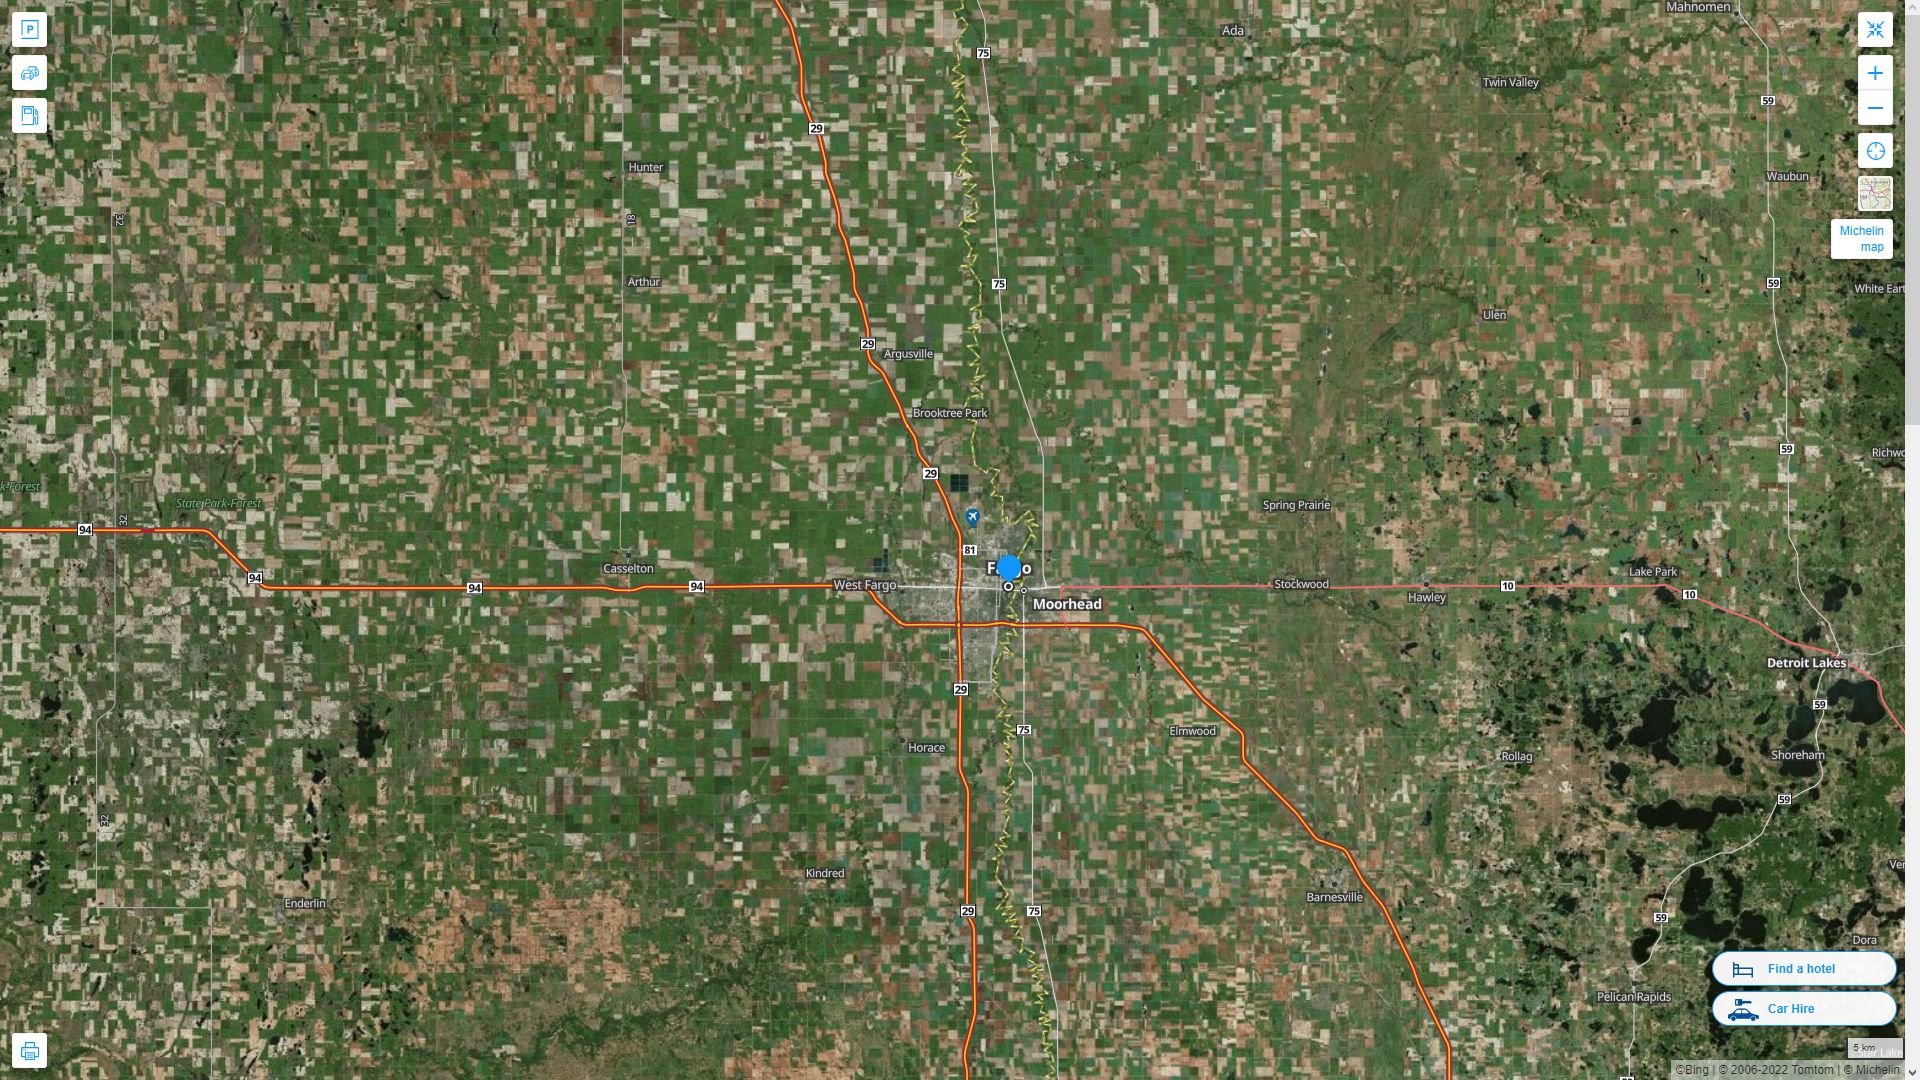 Fargo North Dakota Highway and Road Map with Satellite View